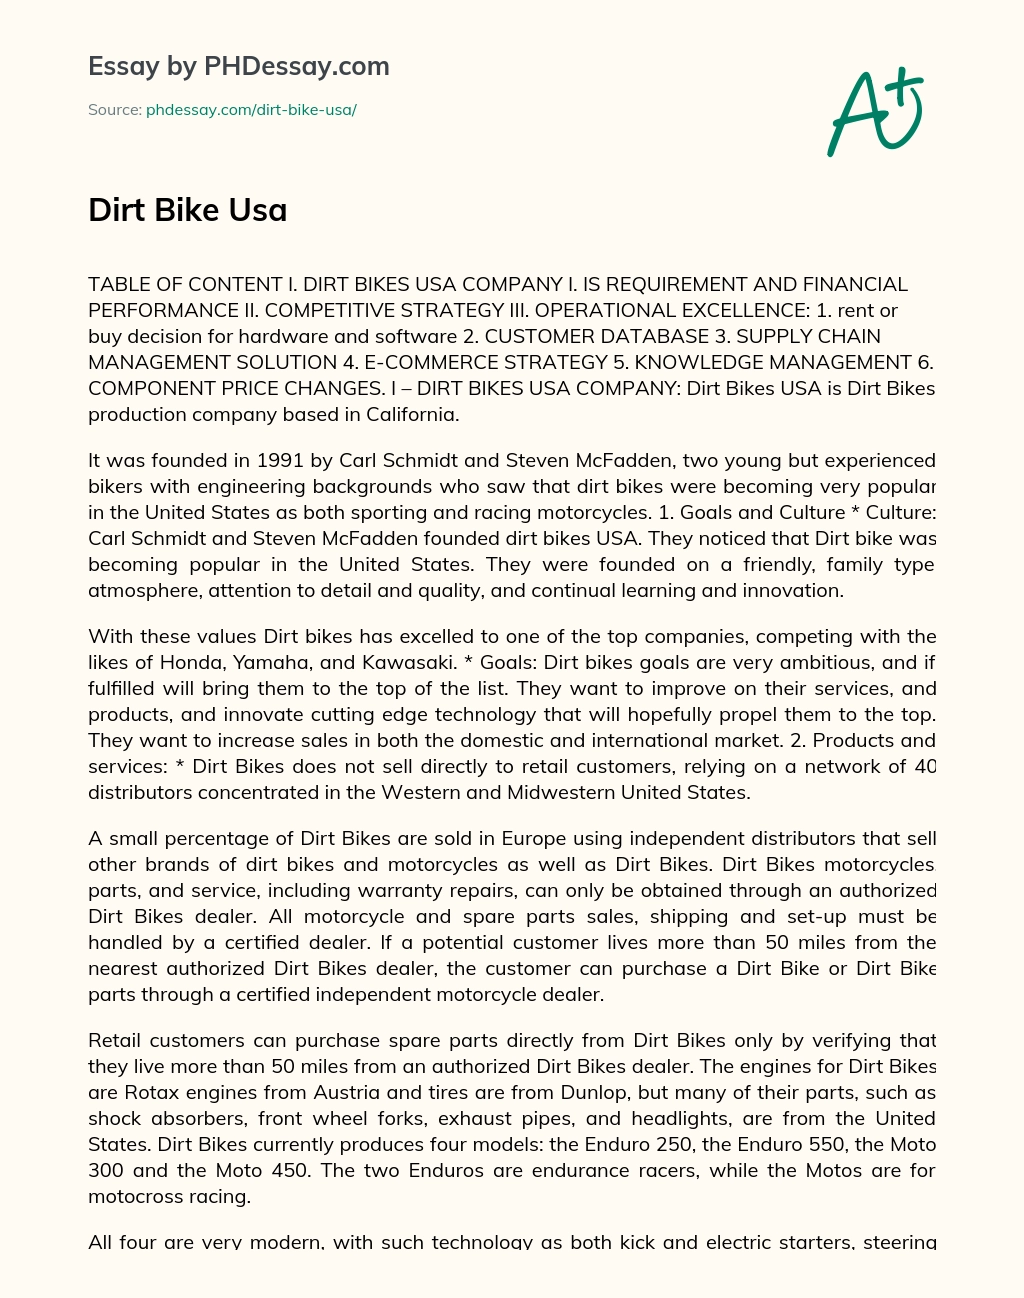 Dirt Bike USA essay